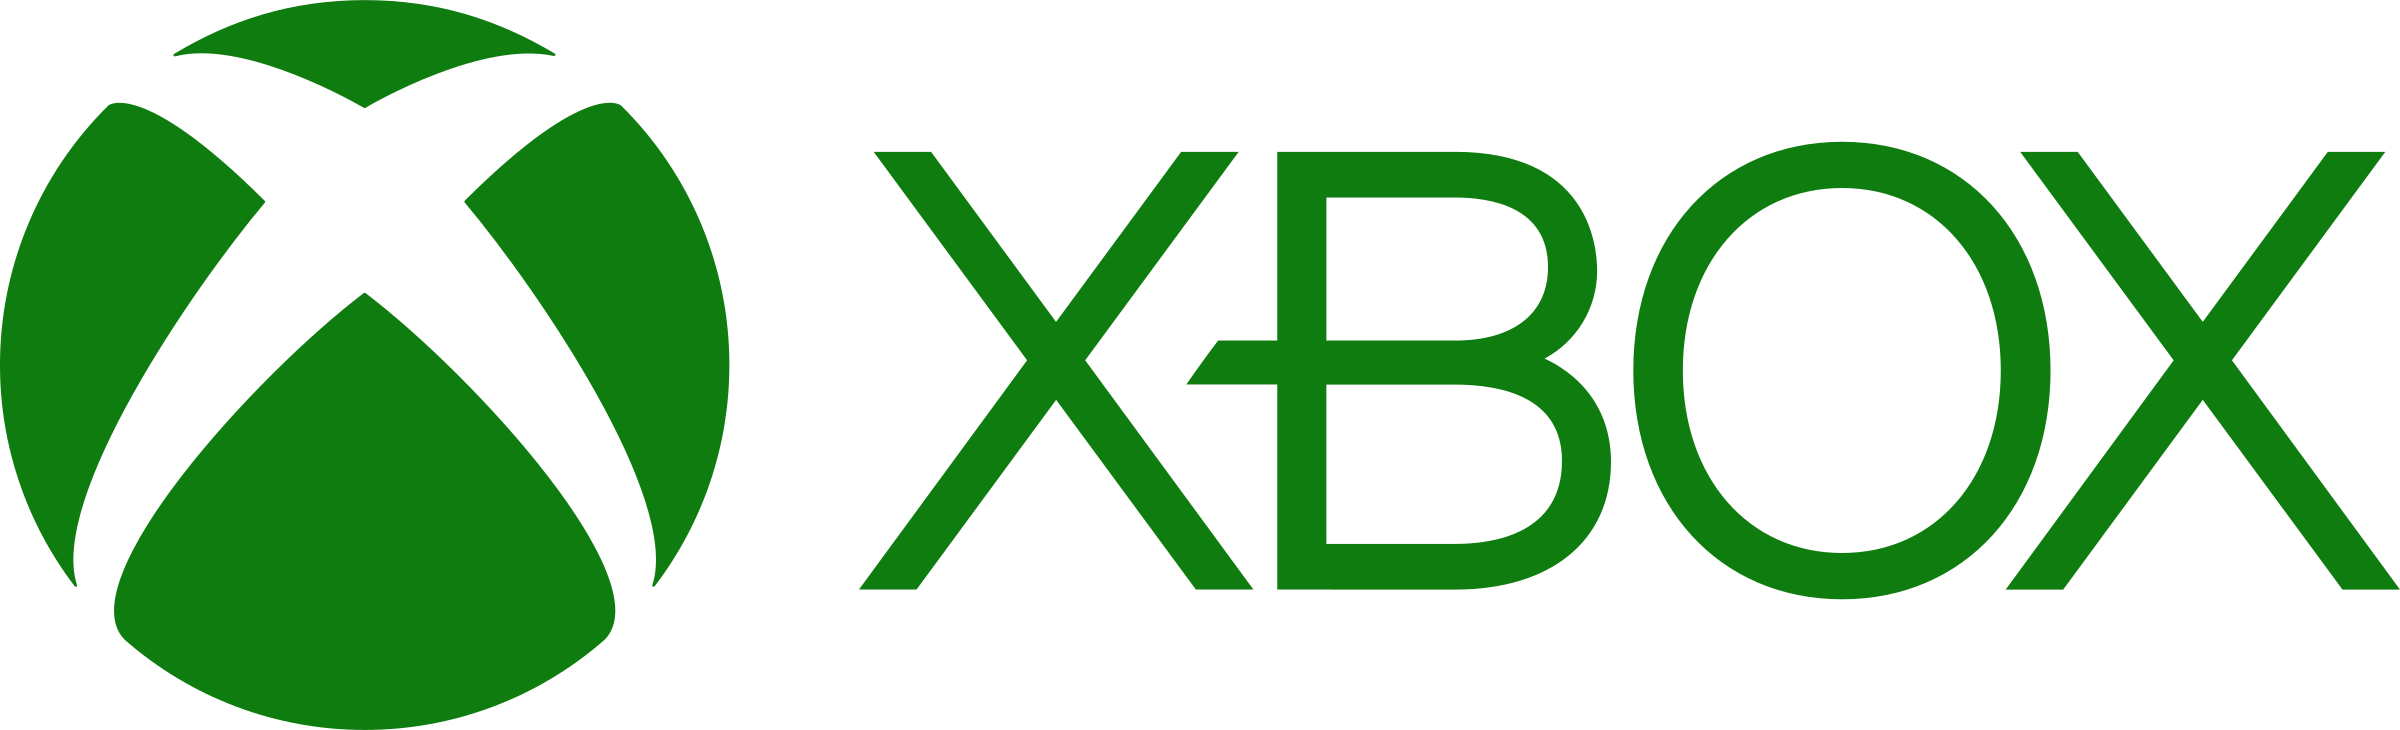 xbox-9-logo-png-transparent.png